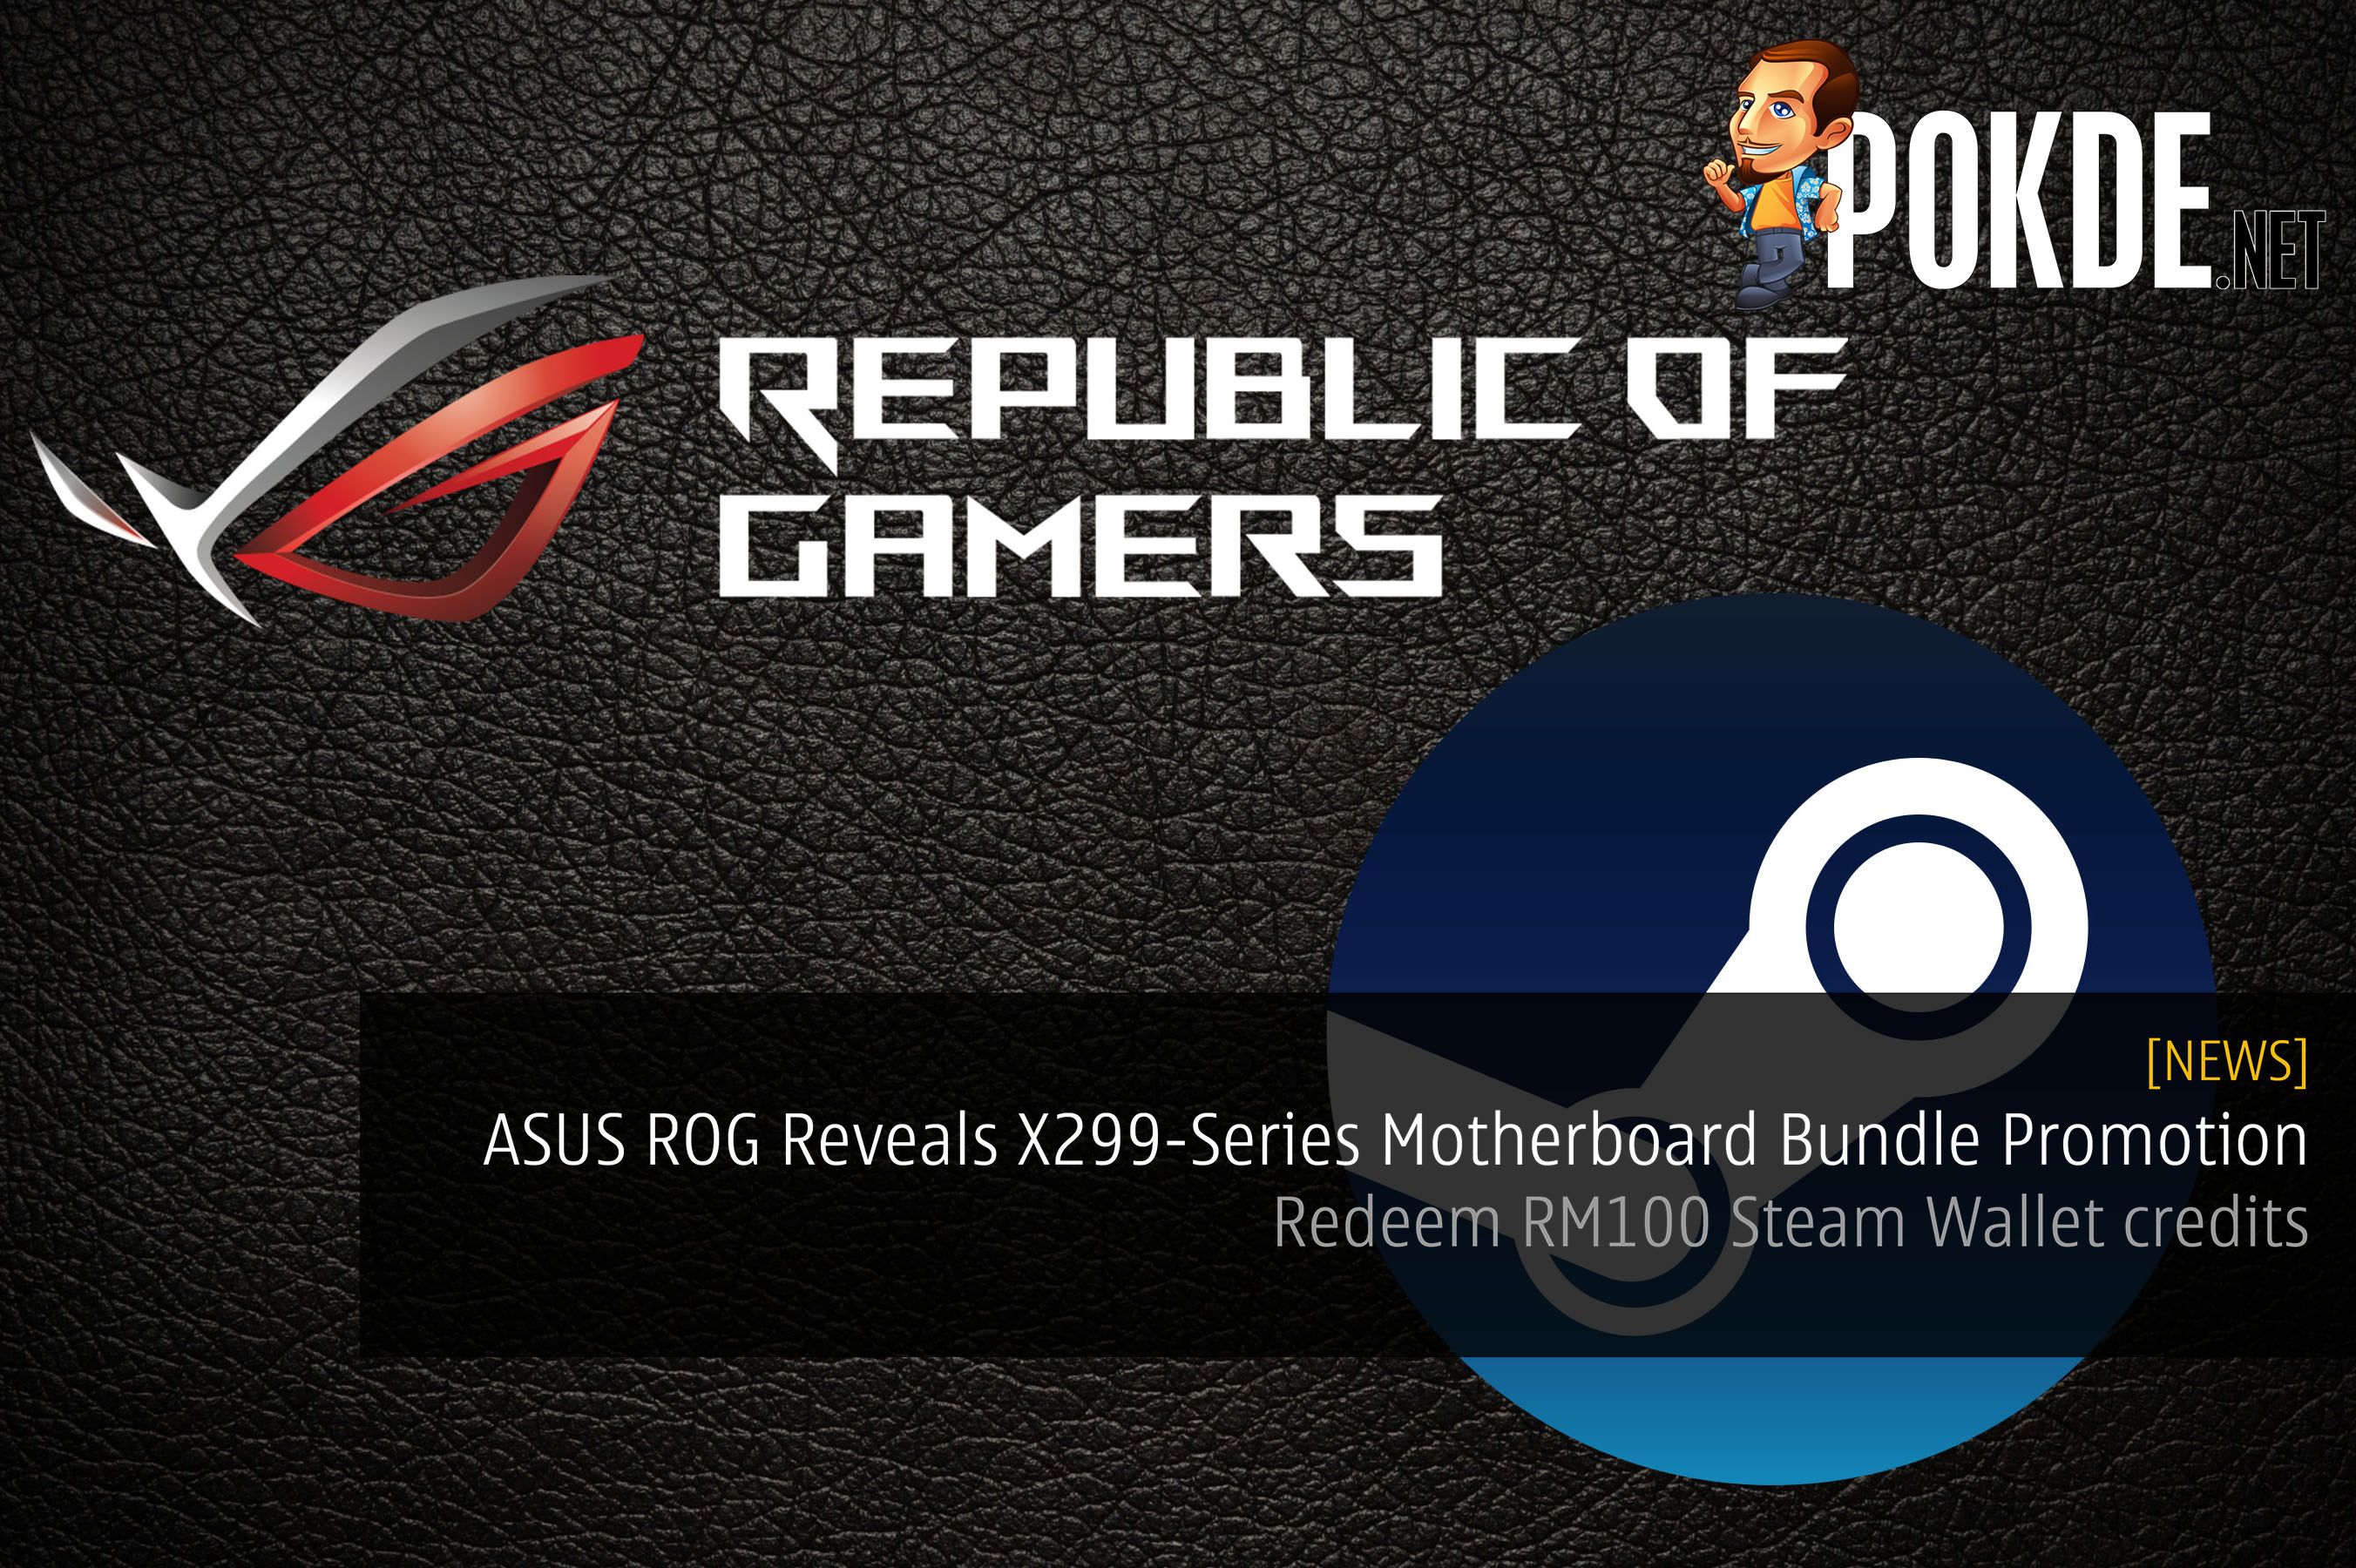 ASUS ROG Reveals X299 Motherboard Series Bundle Promotion - Redeem RM100 Steam Wallet credits 27